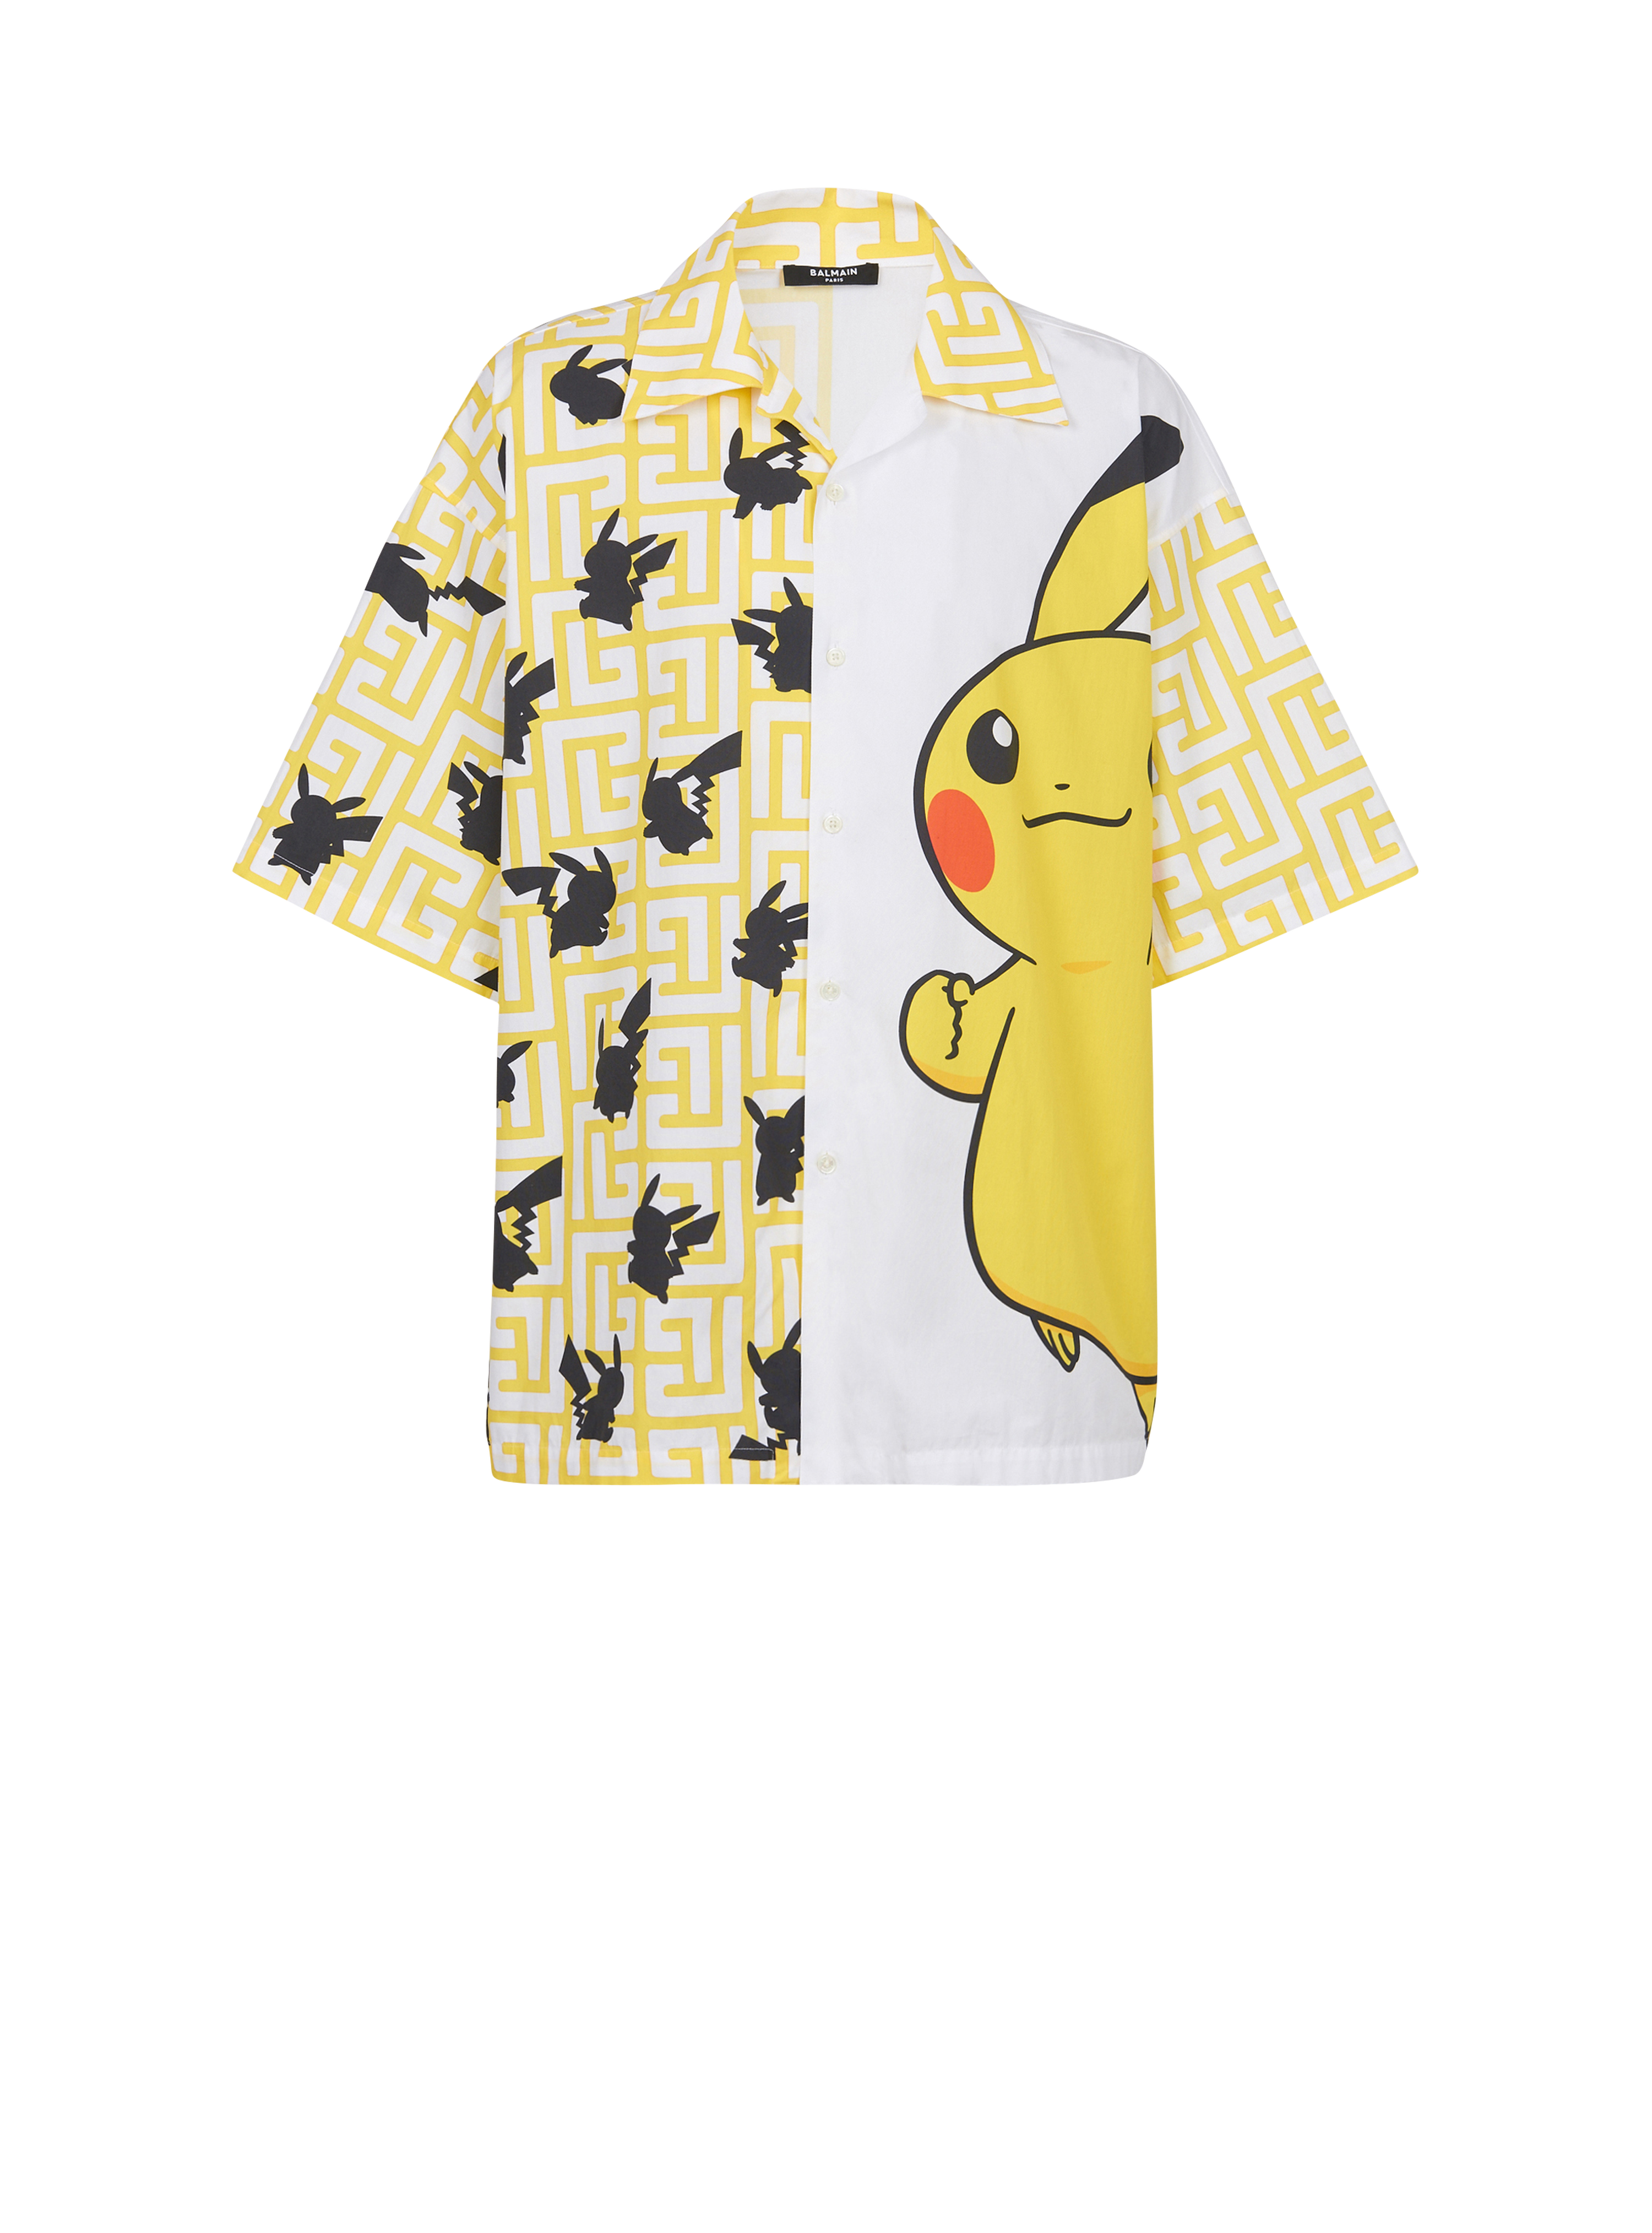 Unisex - Oversized Pokémon print shirt, yellow